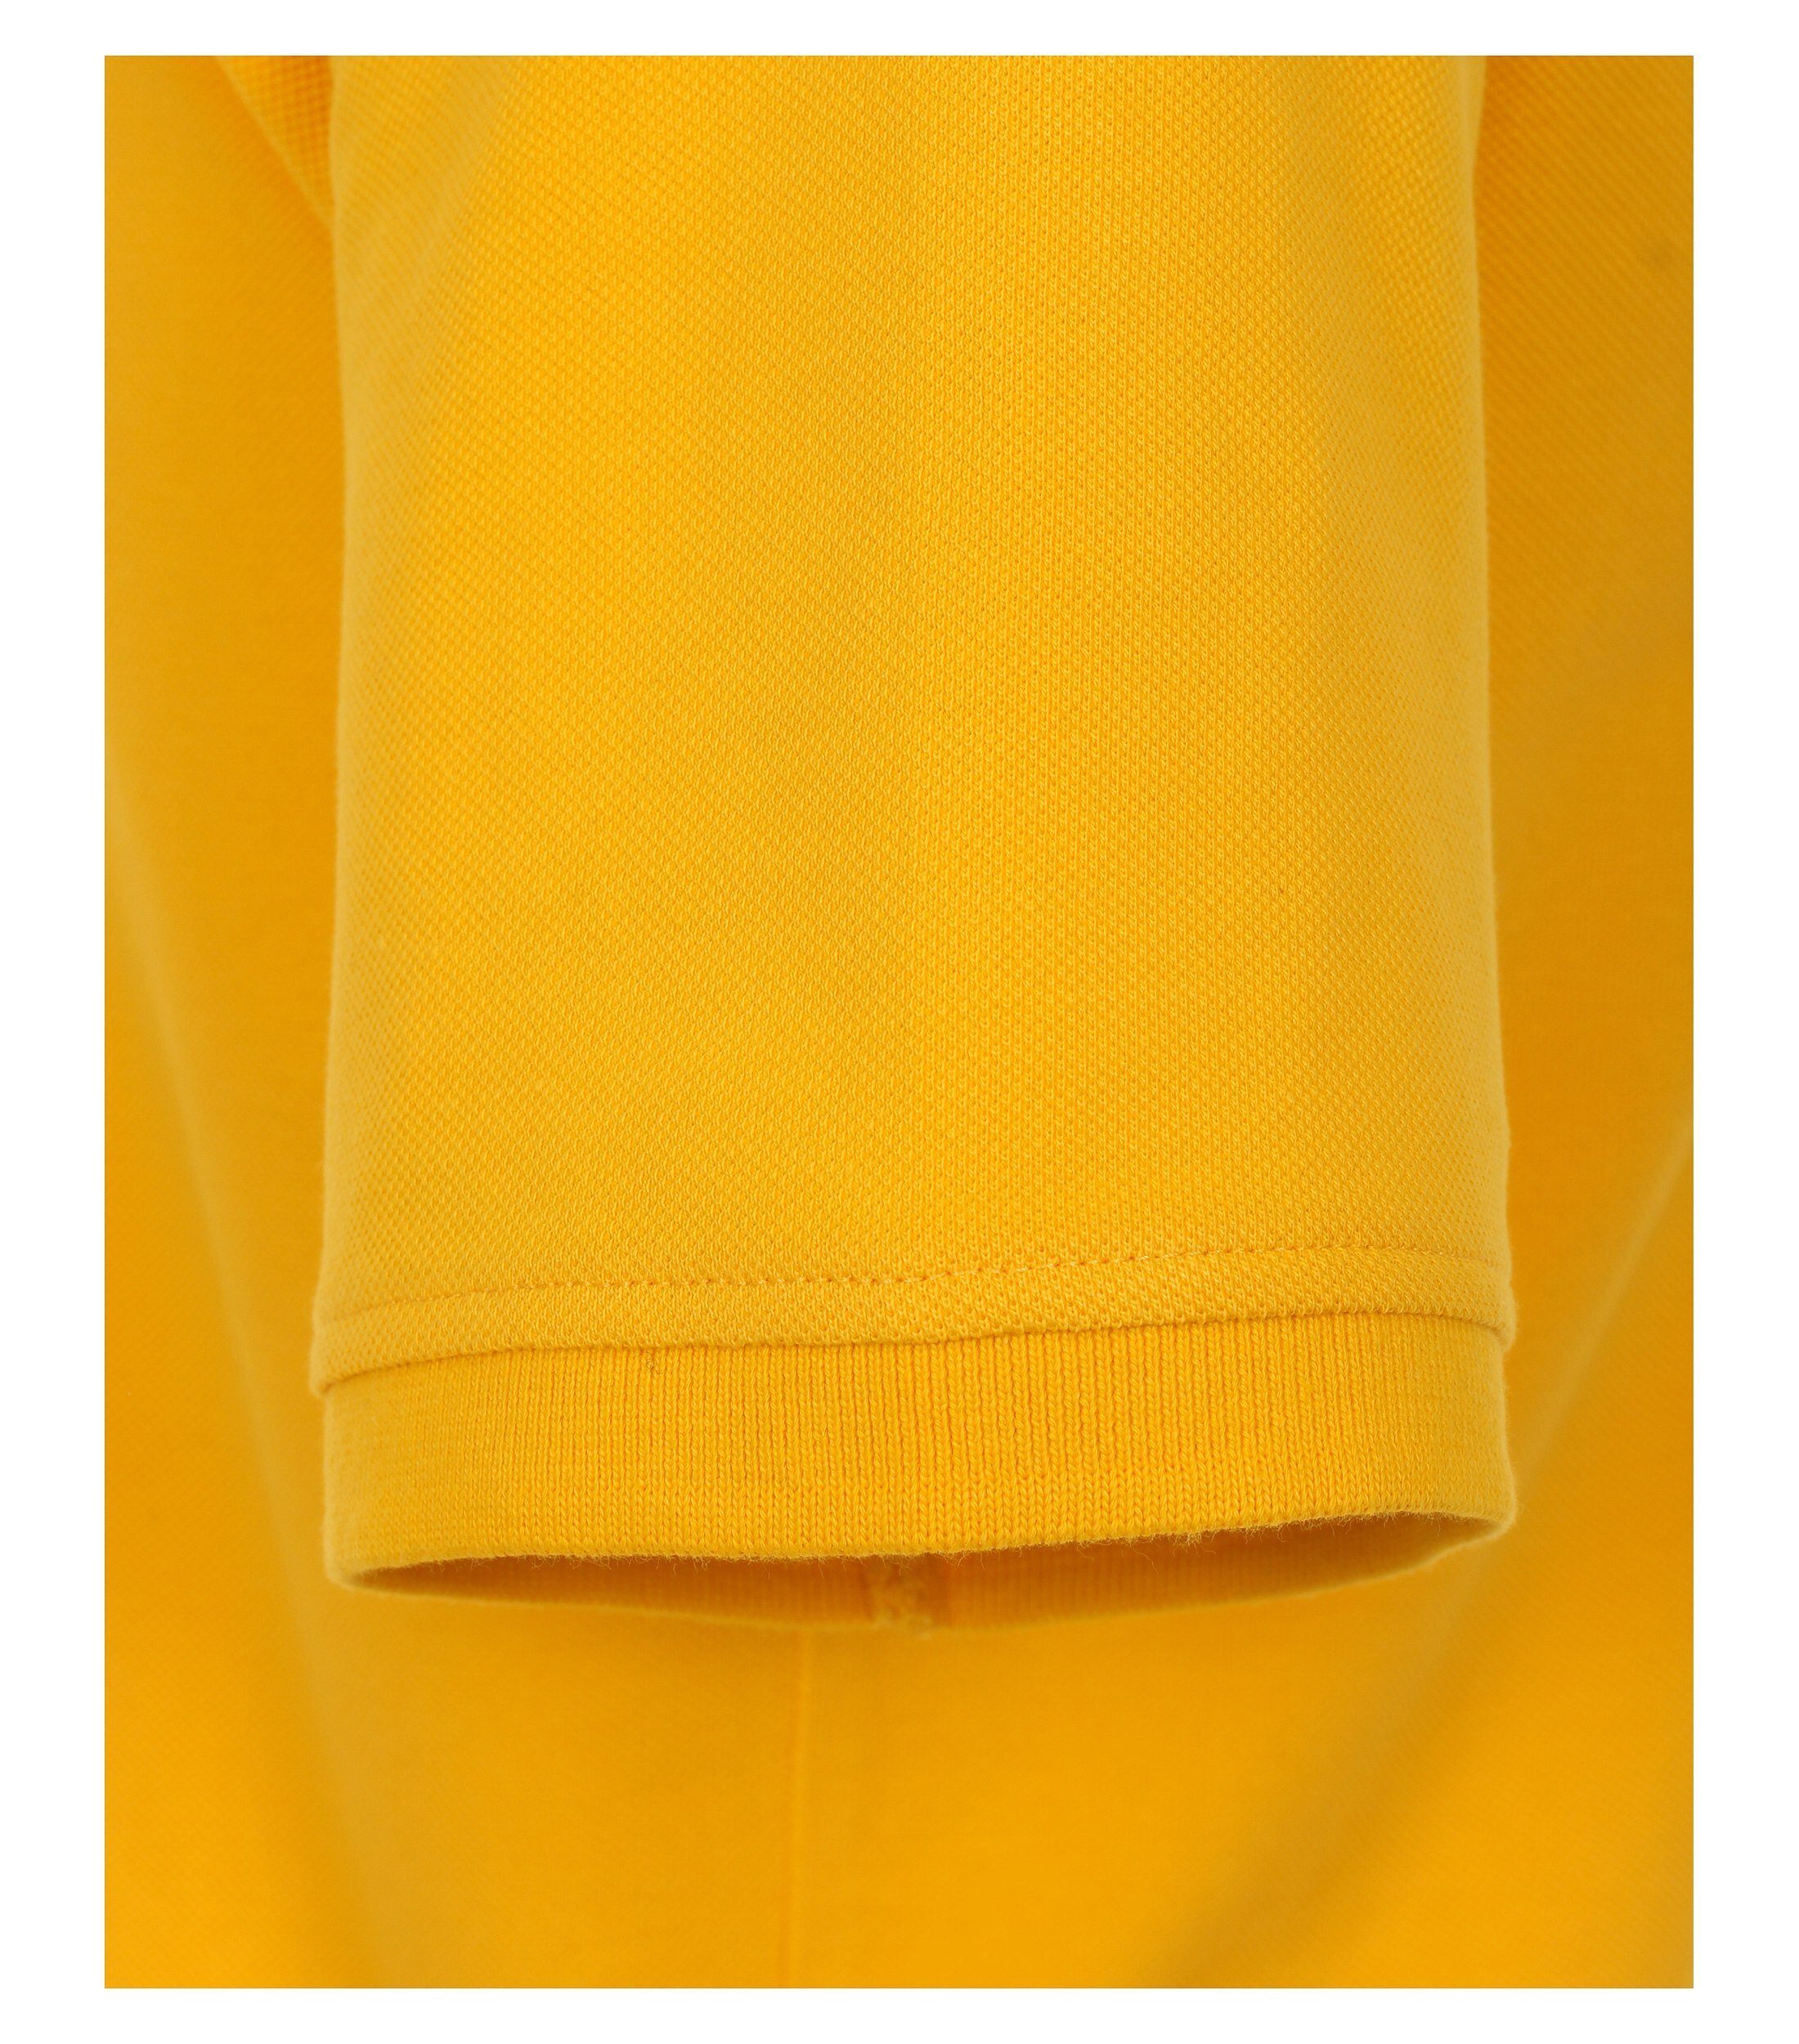 Redmond Poloshirt gelb 42 uni